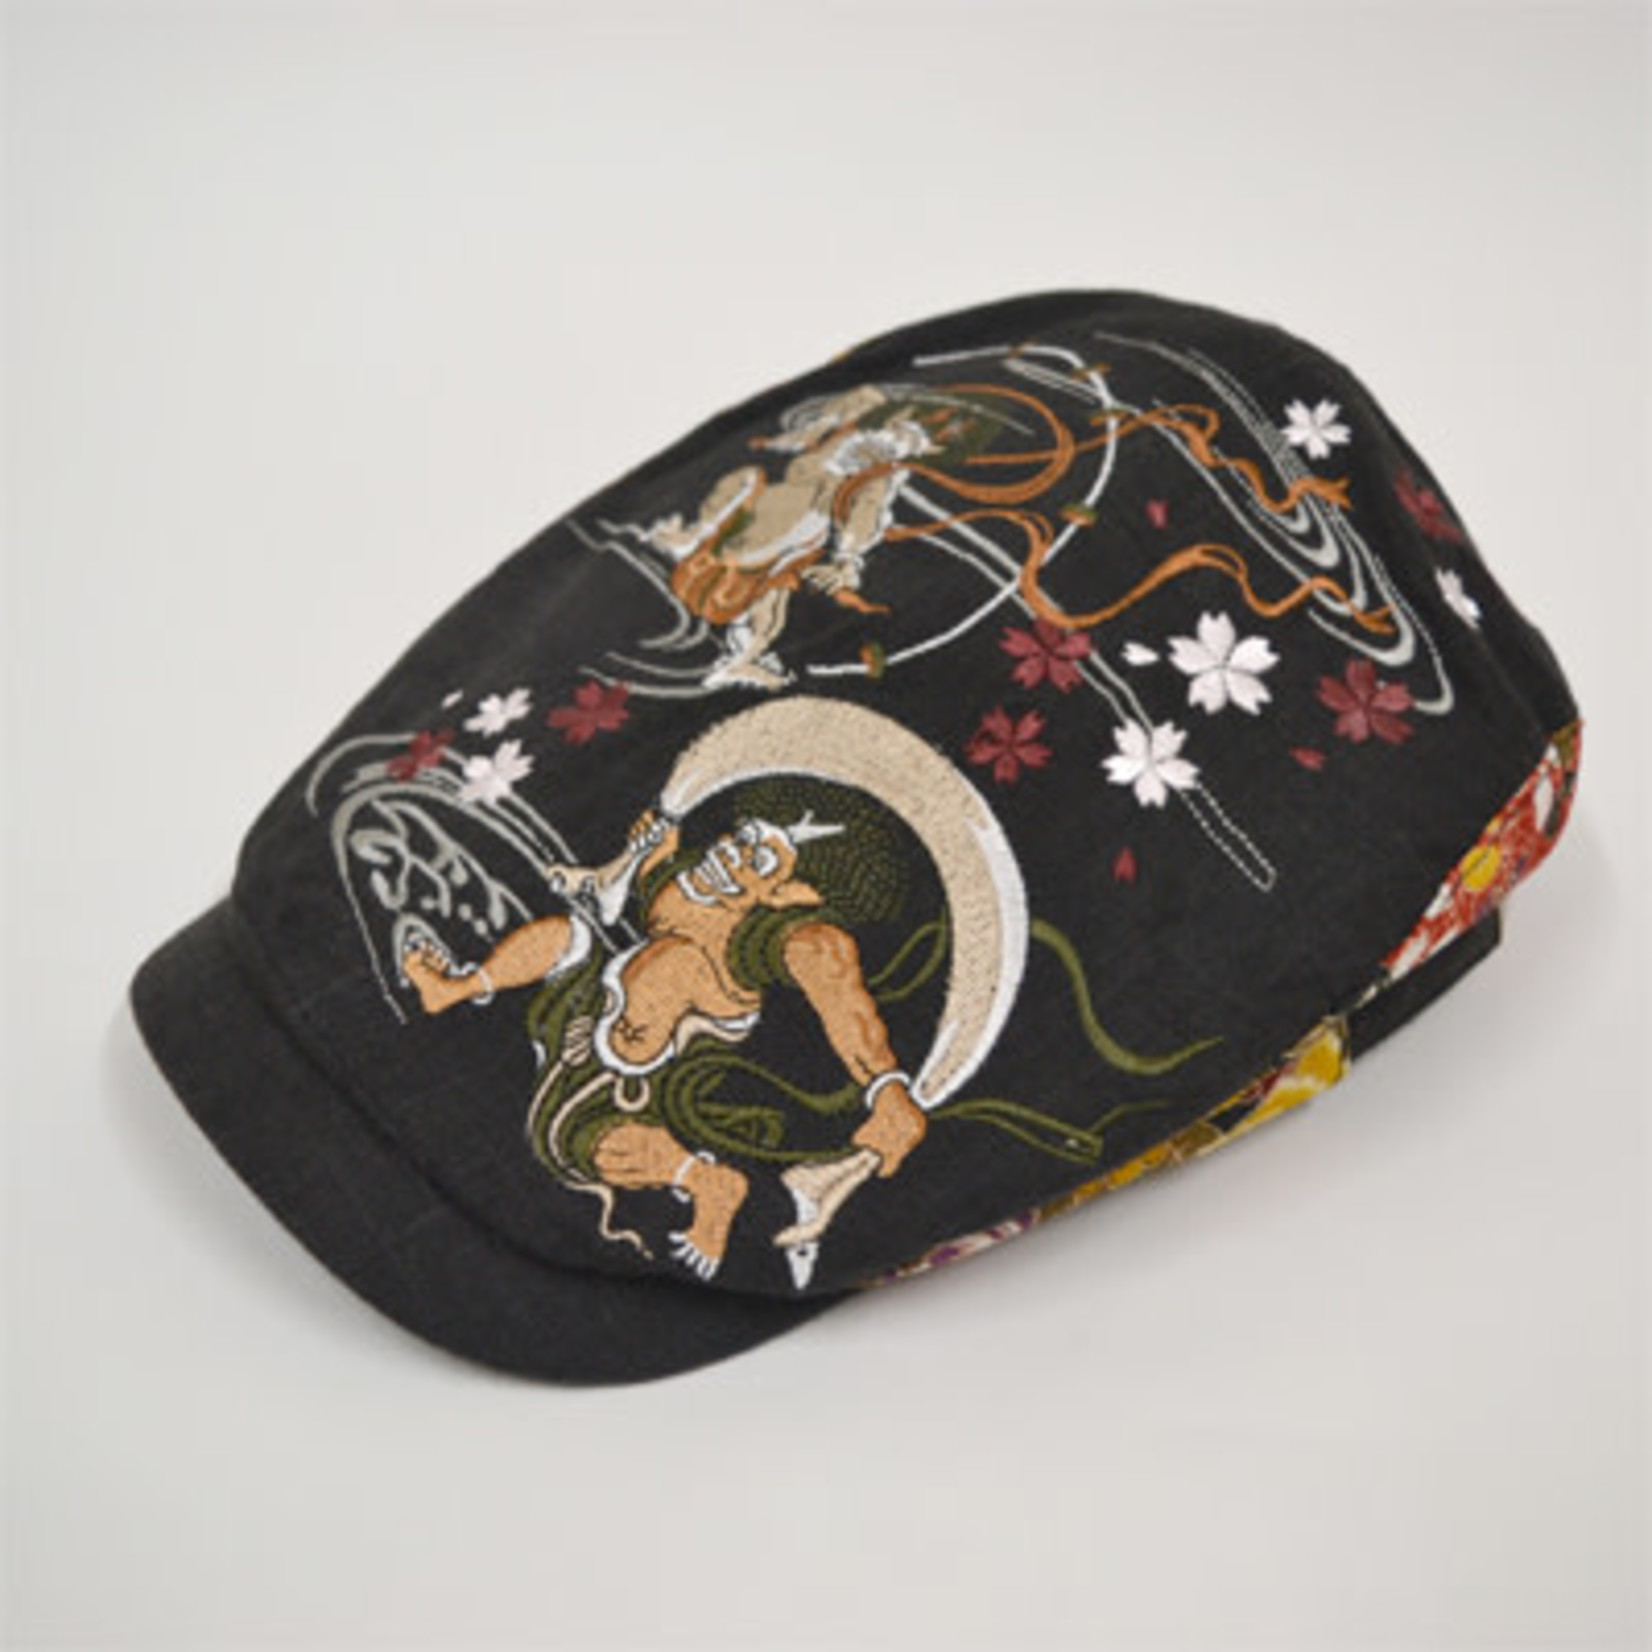 Ripple Hat - Embroidered Hunting Cap Fujin Raijin / Black - H30-6